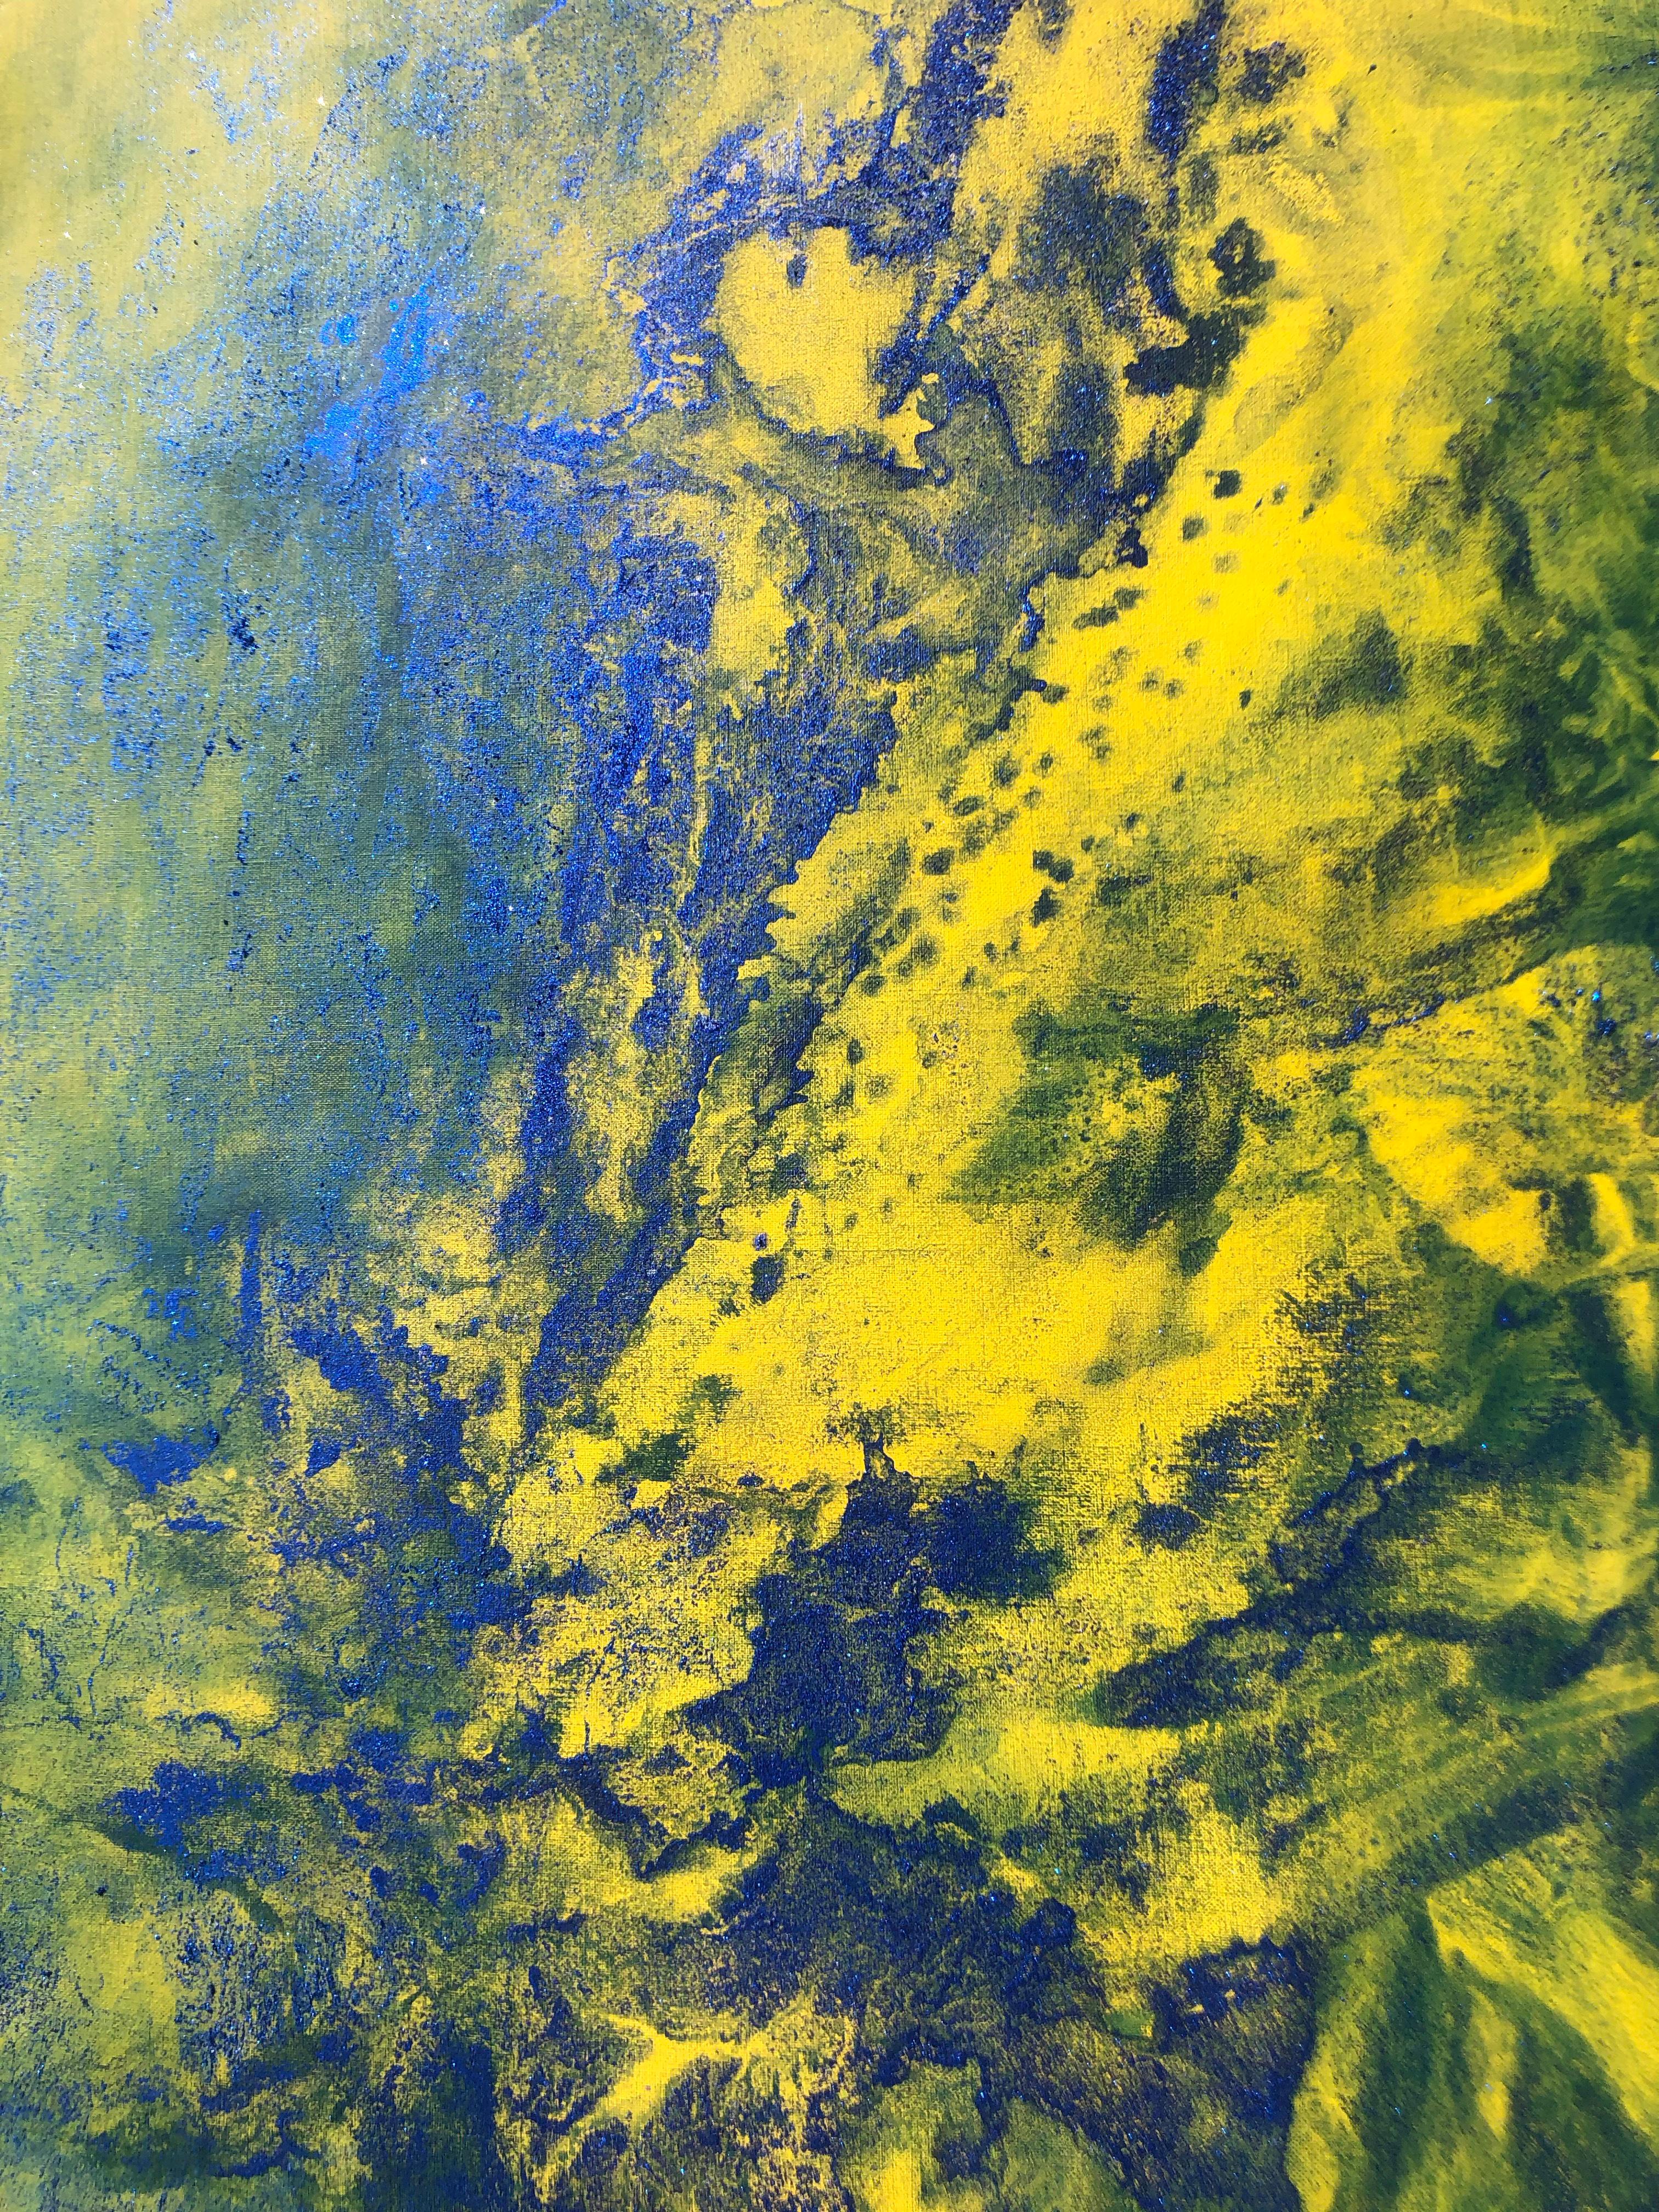 Contemporary art - 21st century painting on linen canvas - Blue, yellow, waves
Artist: Volodymyr Zayichenko
Year of creation: 2019
Size: H 59.45 in. x W 20.08 in. x D 1.19 in.
         H 151 cm x W 51 cm x D 3 cm